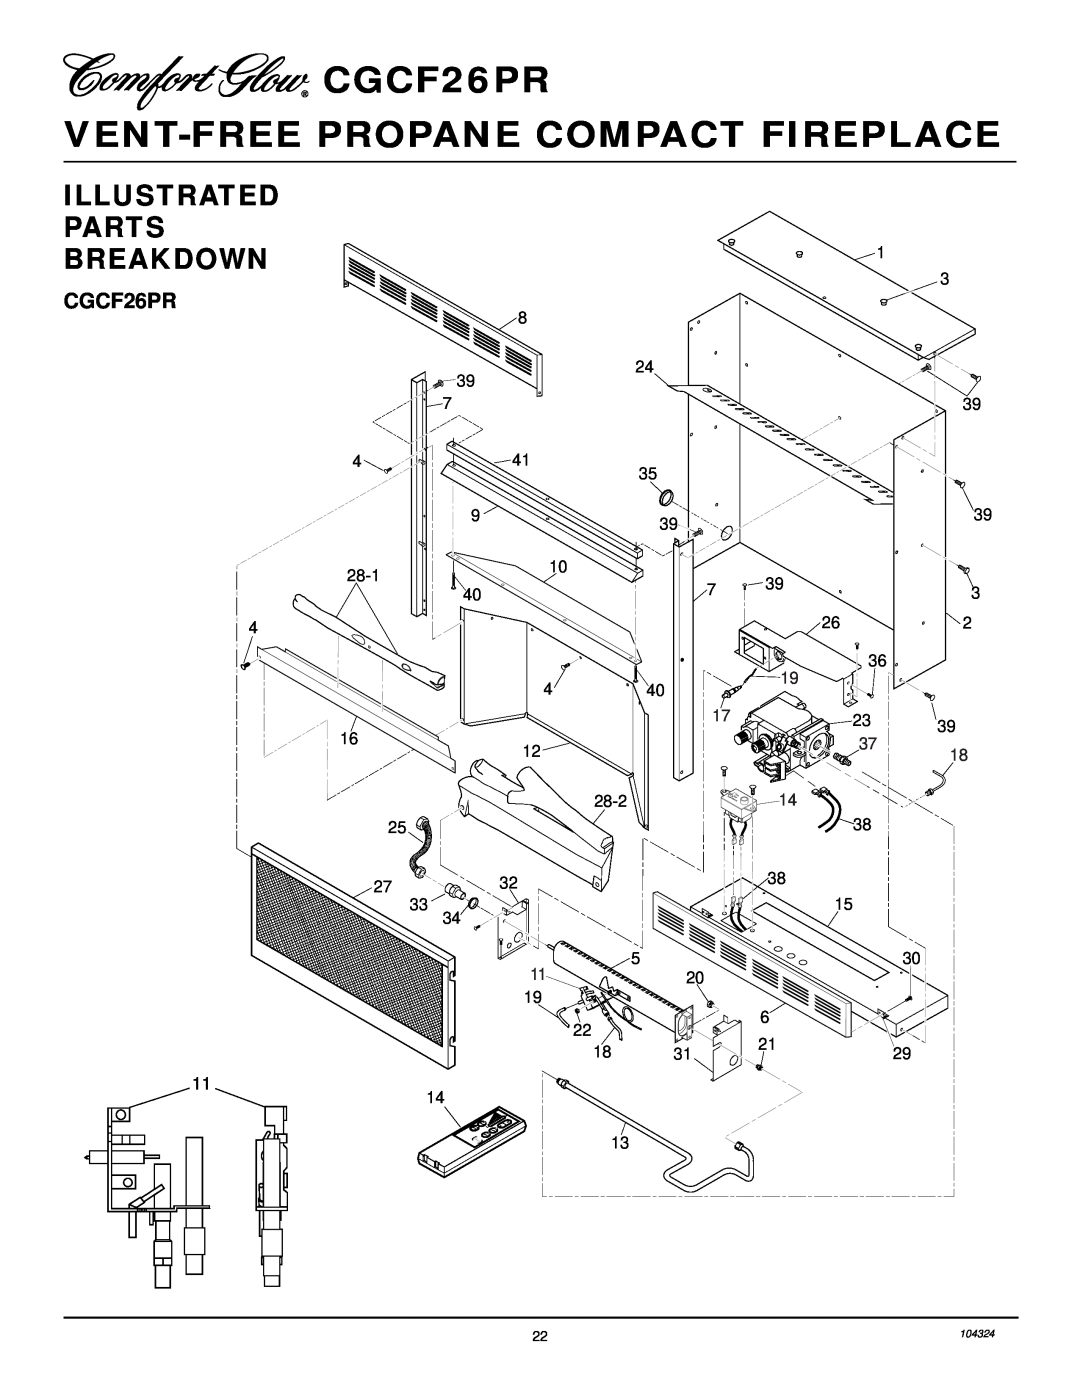 Desa installation manual Illustrated Parts Breakdown, CGCF26PR VENT-FREEPROPANE COMPACT FIREPLACE 